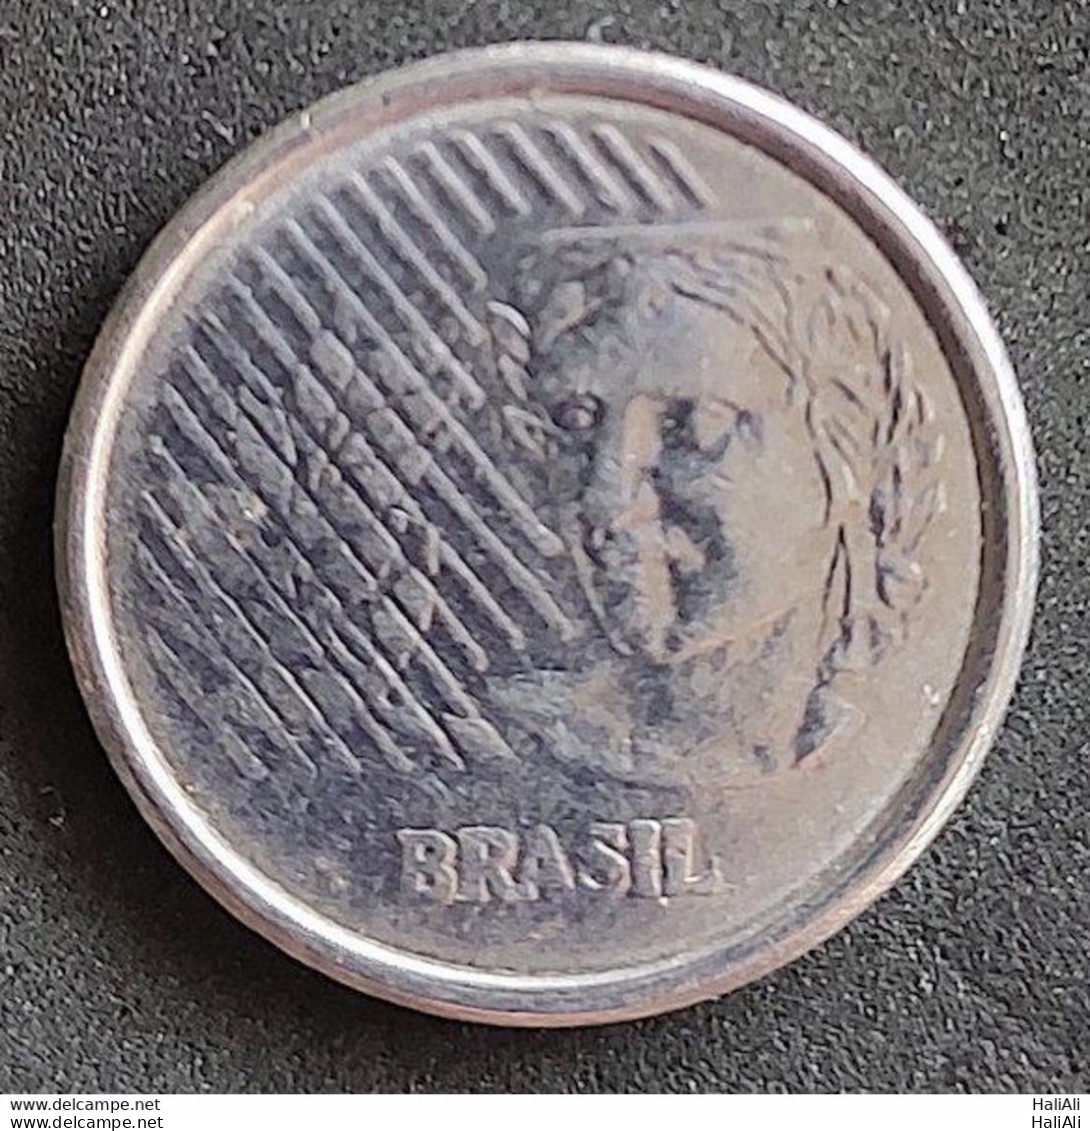 Coin Brazil Moeda Brasil 1994 1 Centavo 3 - Brasilien